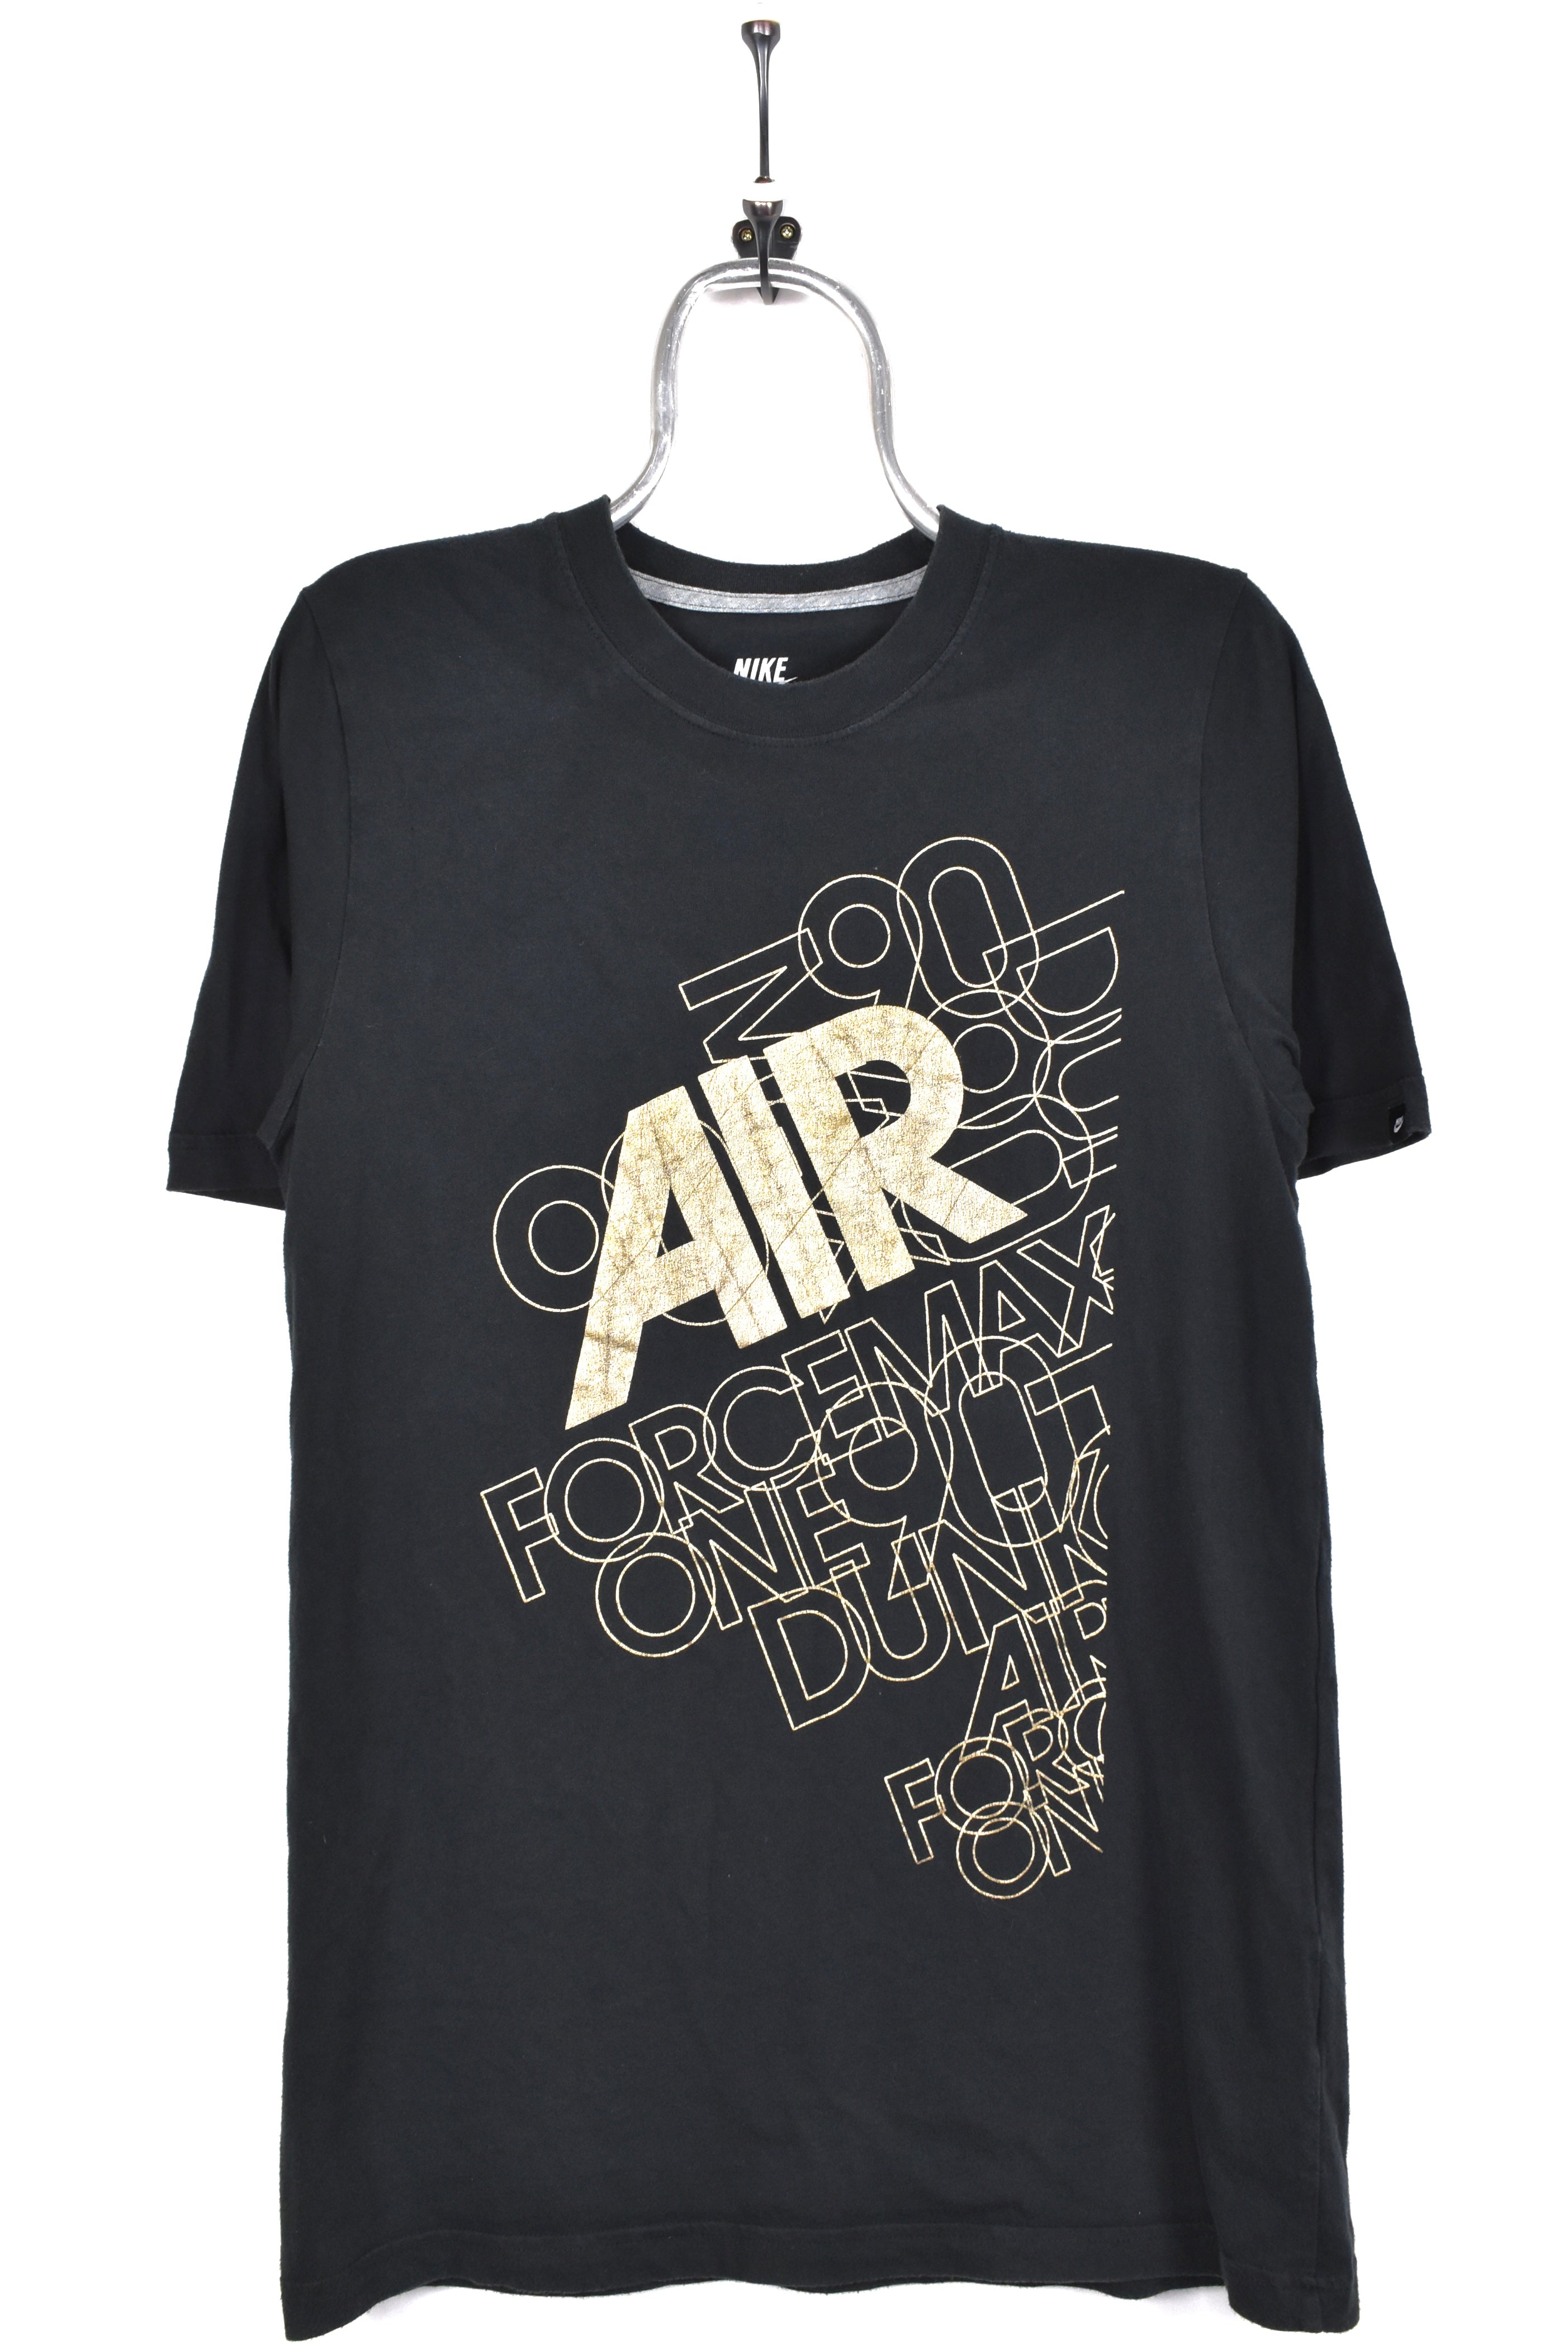 Modern Nike Air shirt, black graphic tee - AU S NIKE